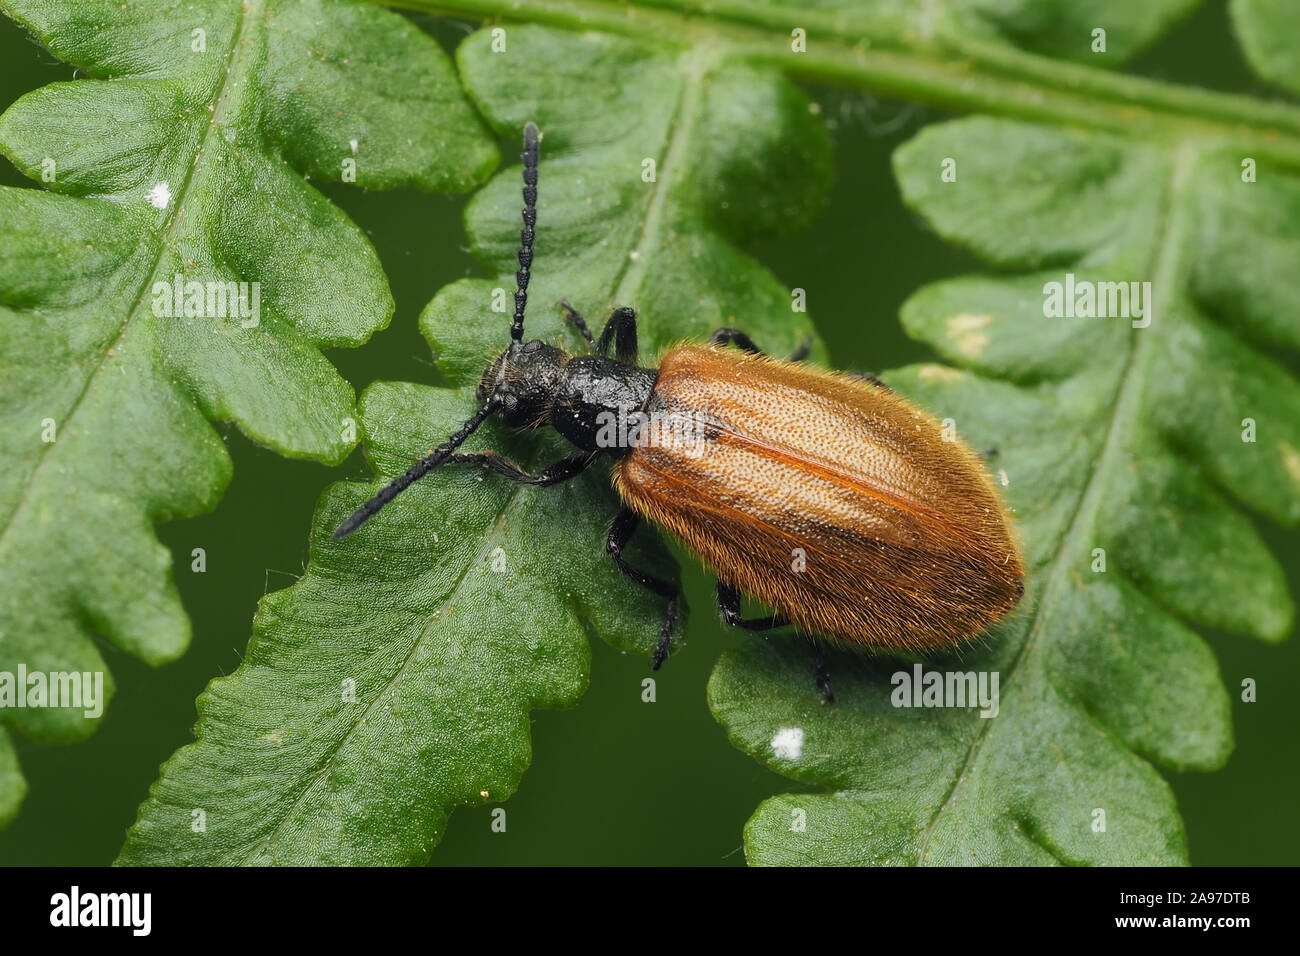 Lagria hirta beetle resting on fern. Tipperary, Ireland Stock Photo